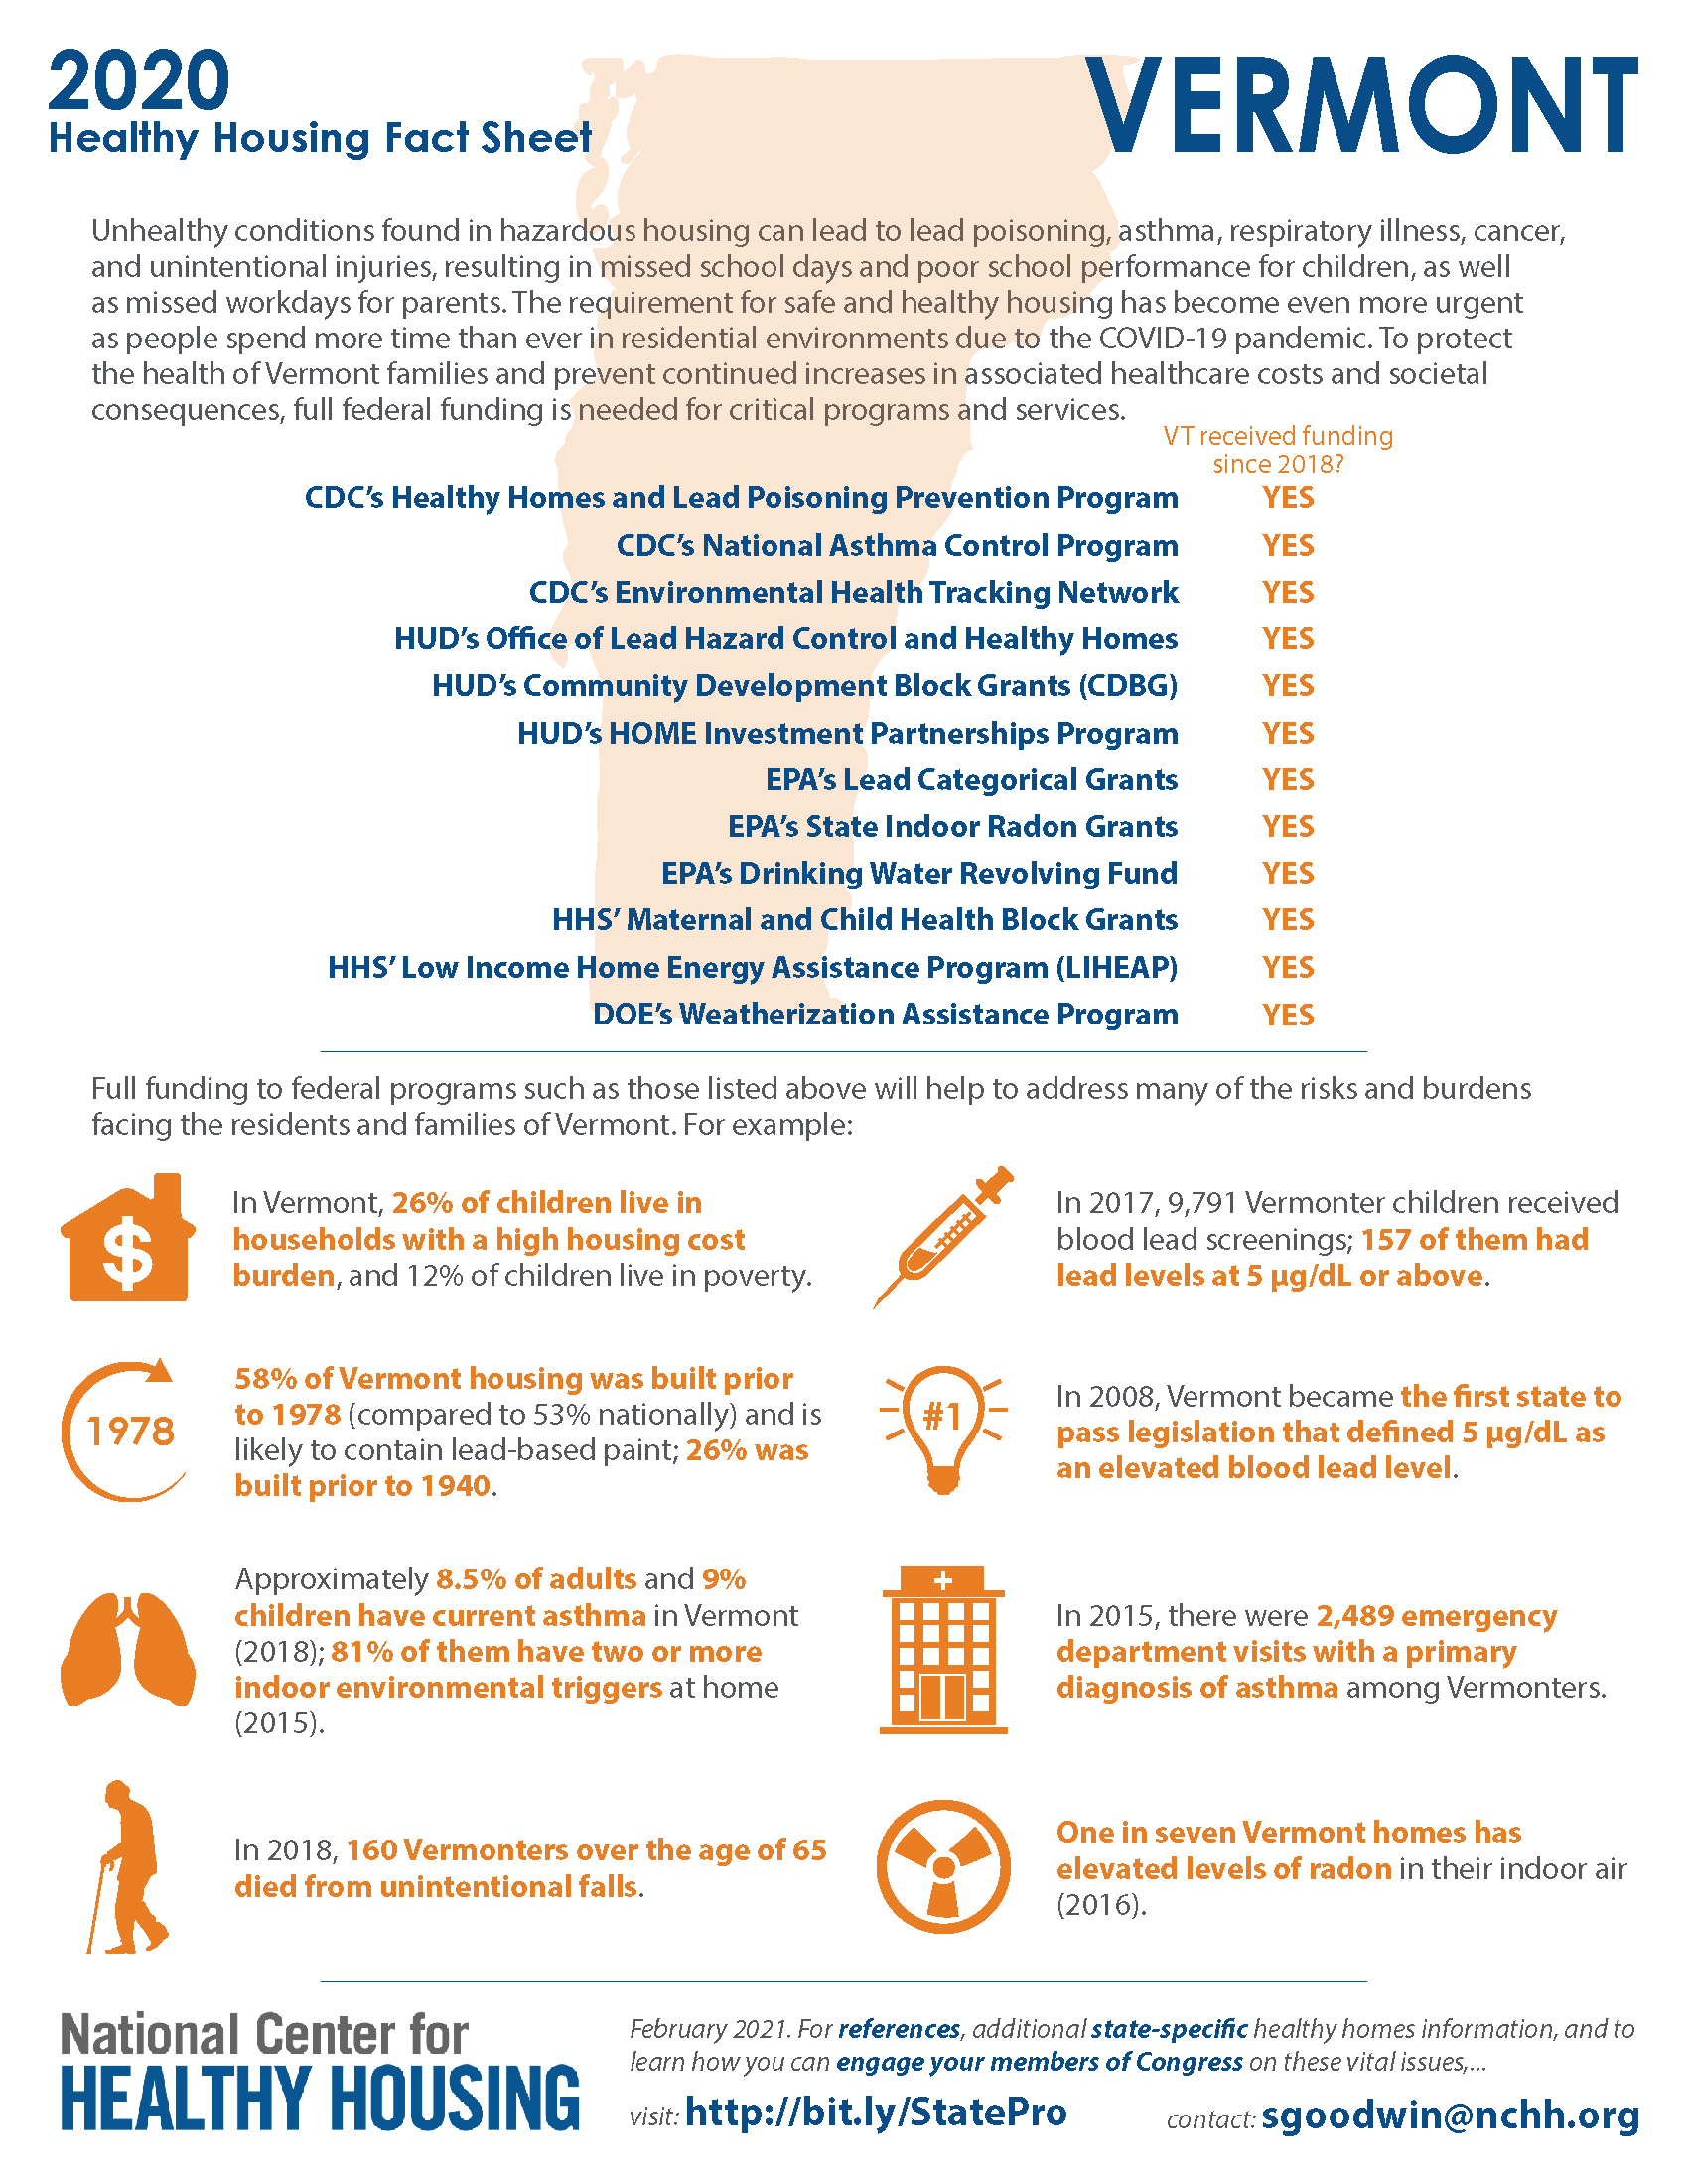 Healthy Housing Fact Sheet - Vermont 2020